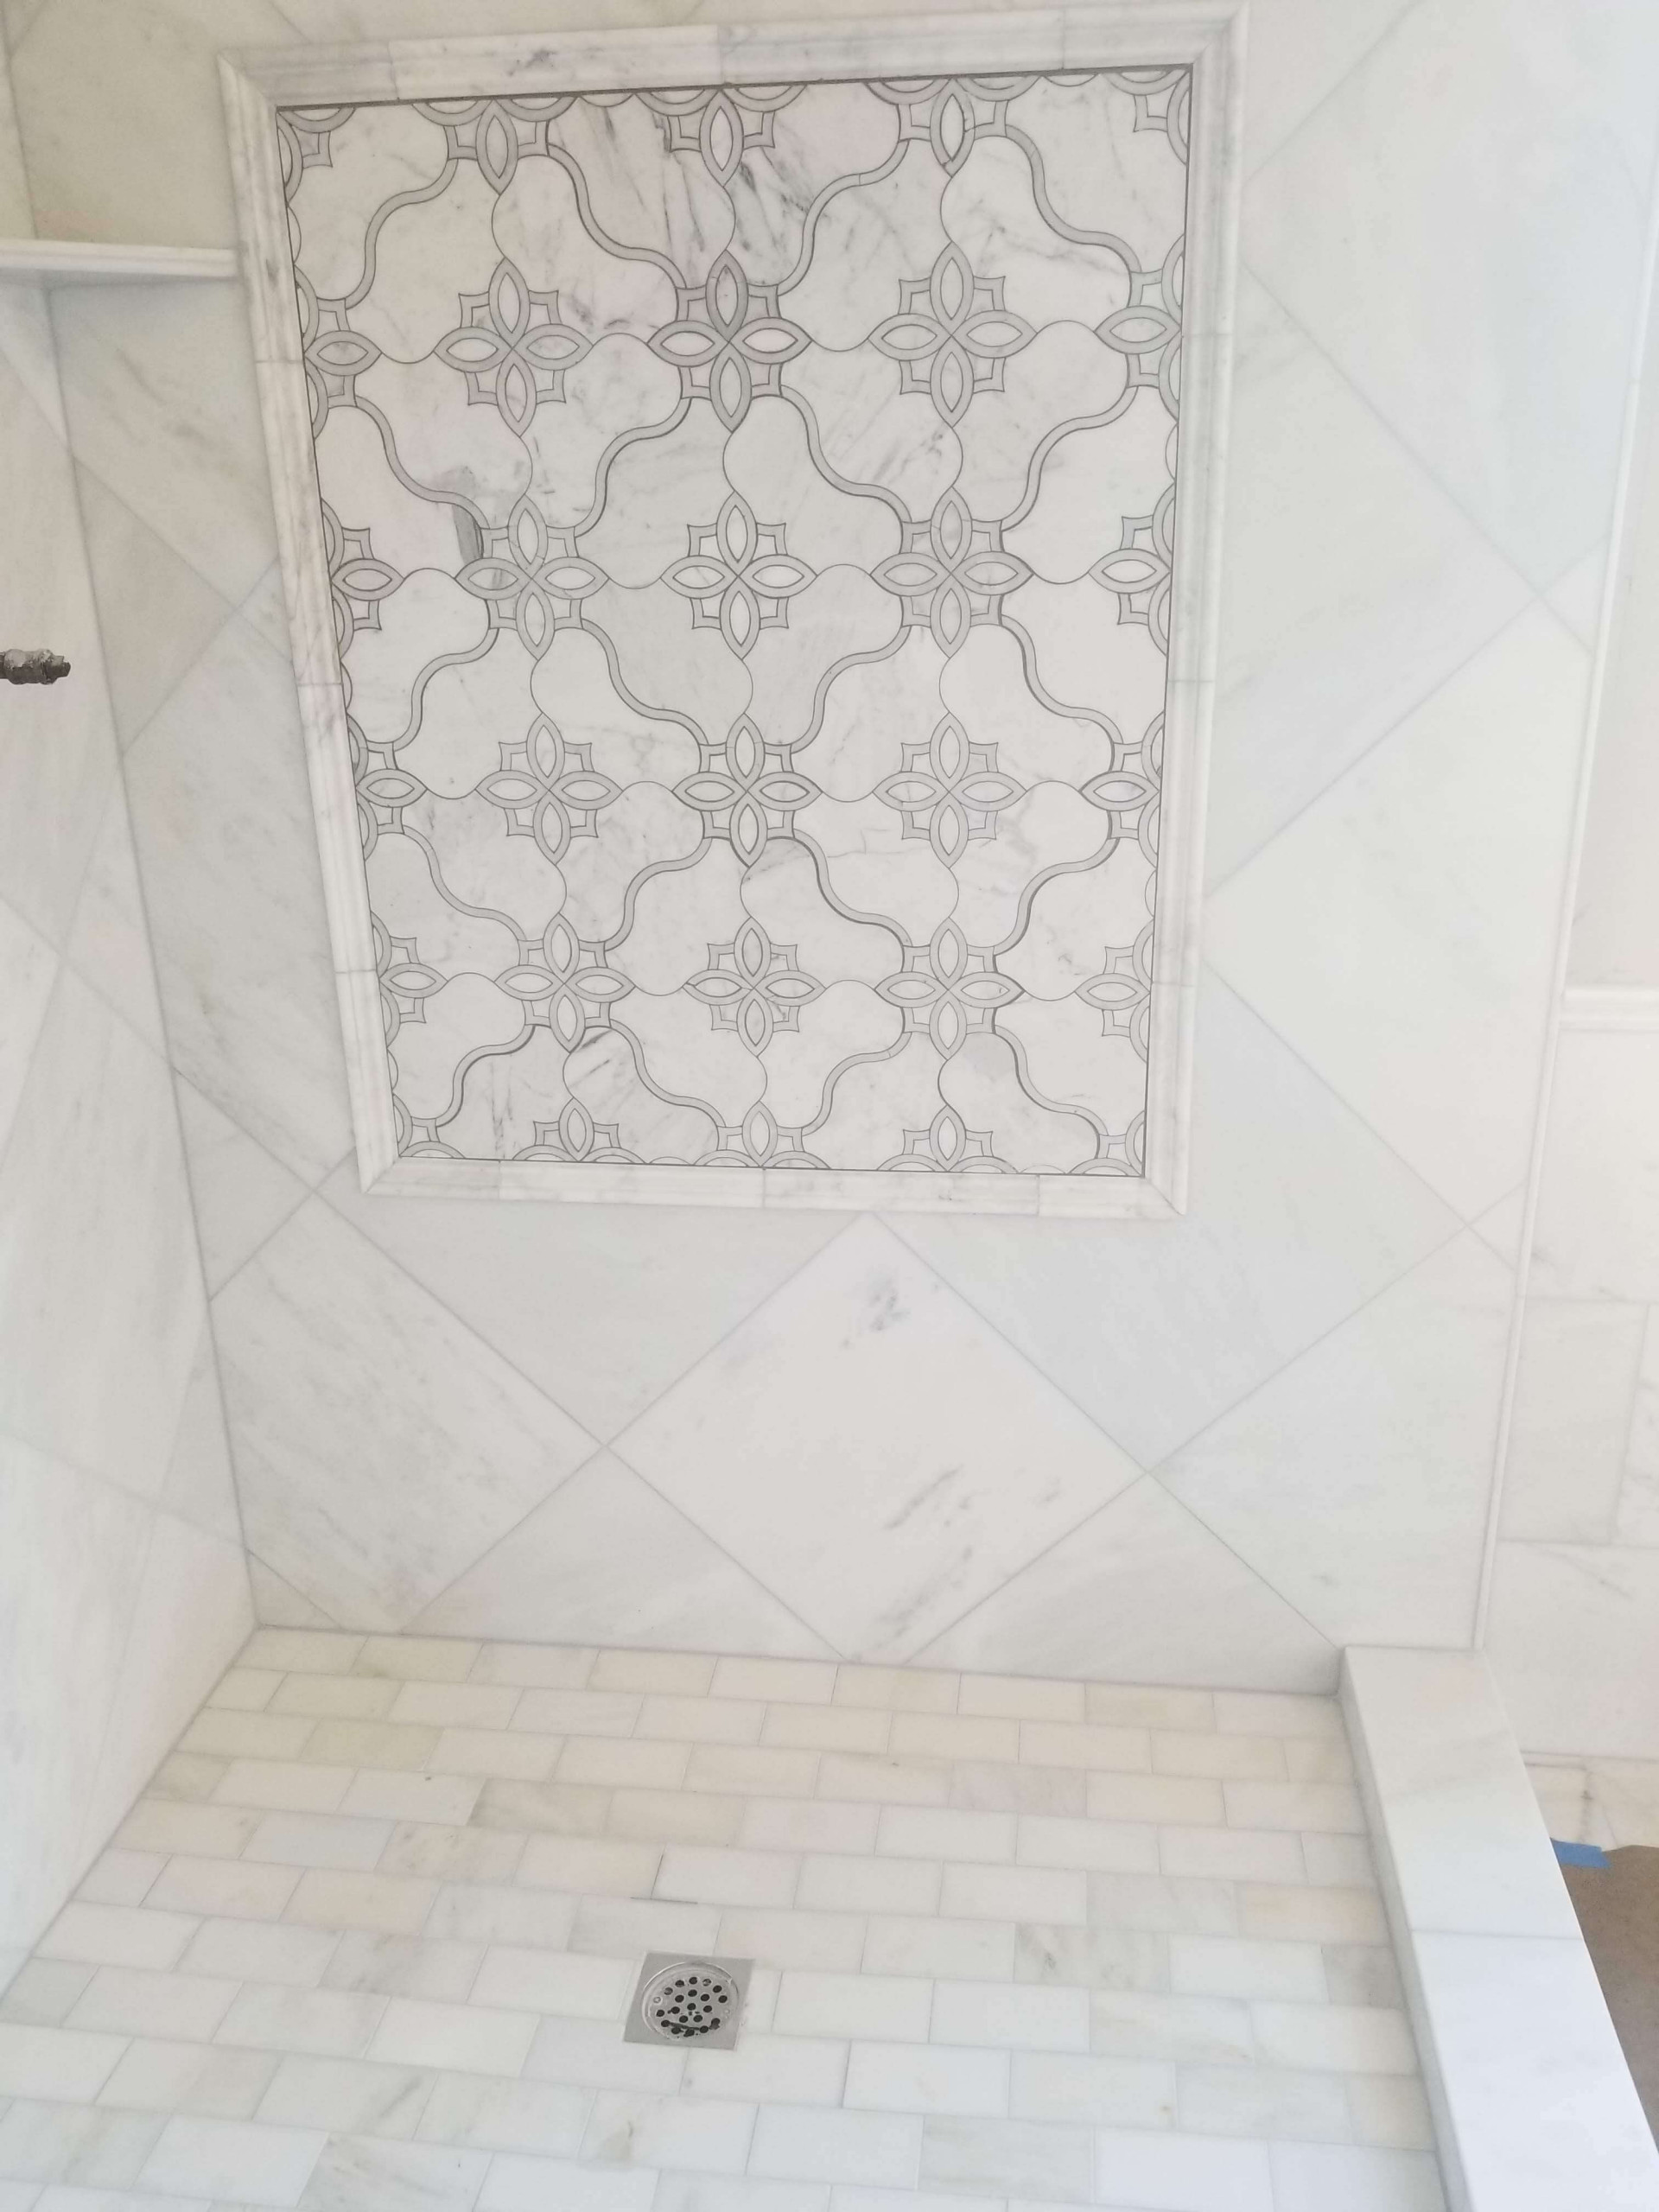 Tile Bathrooms